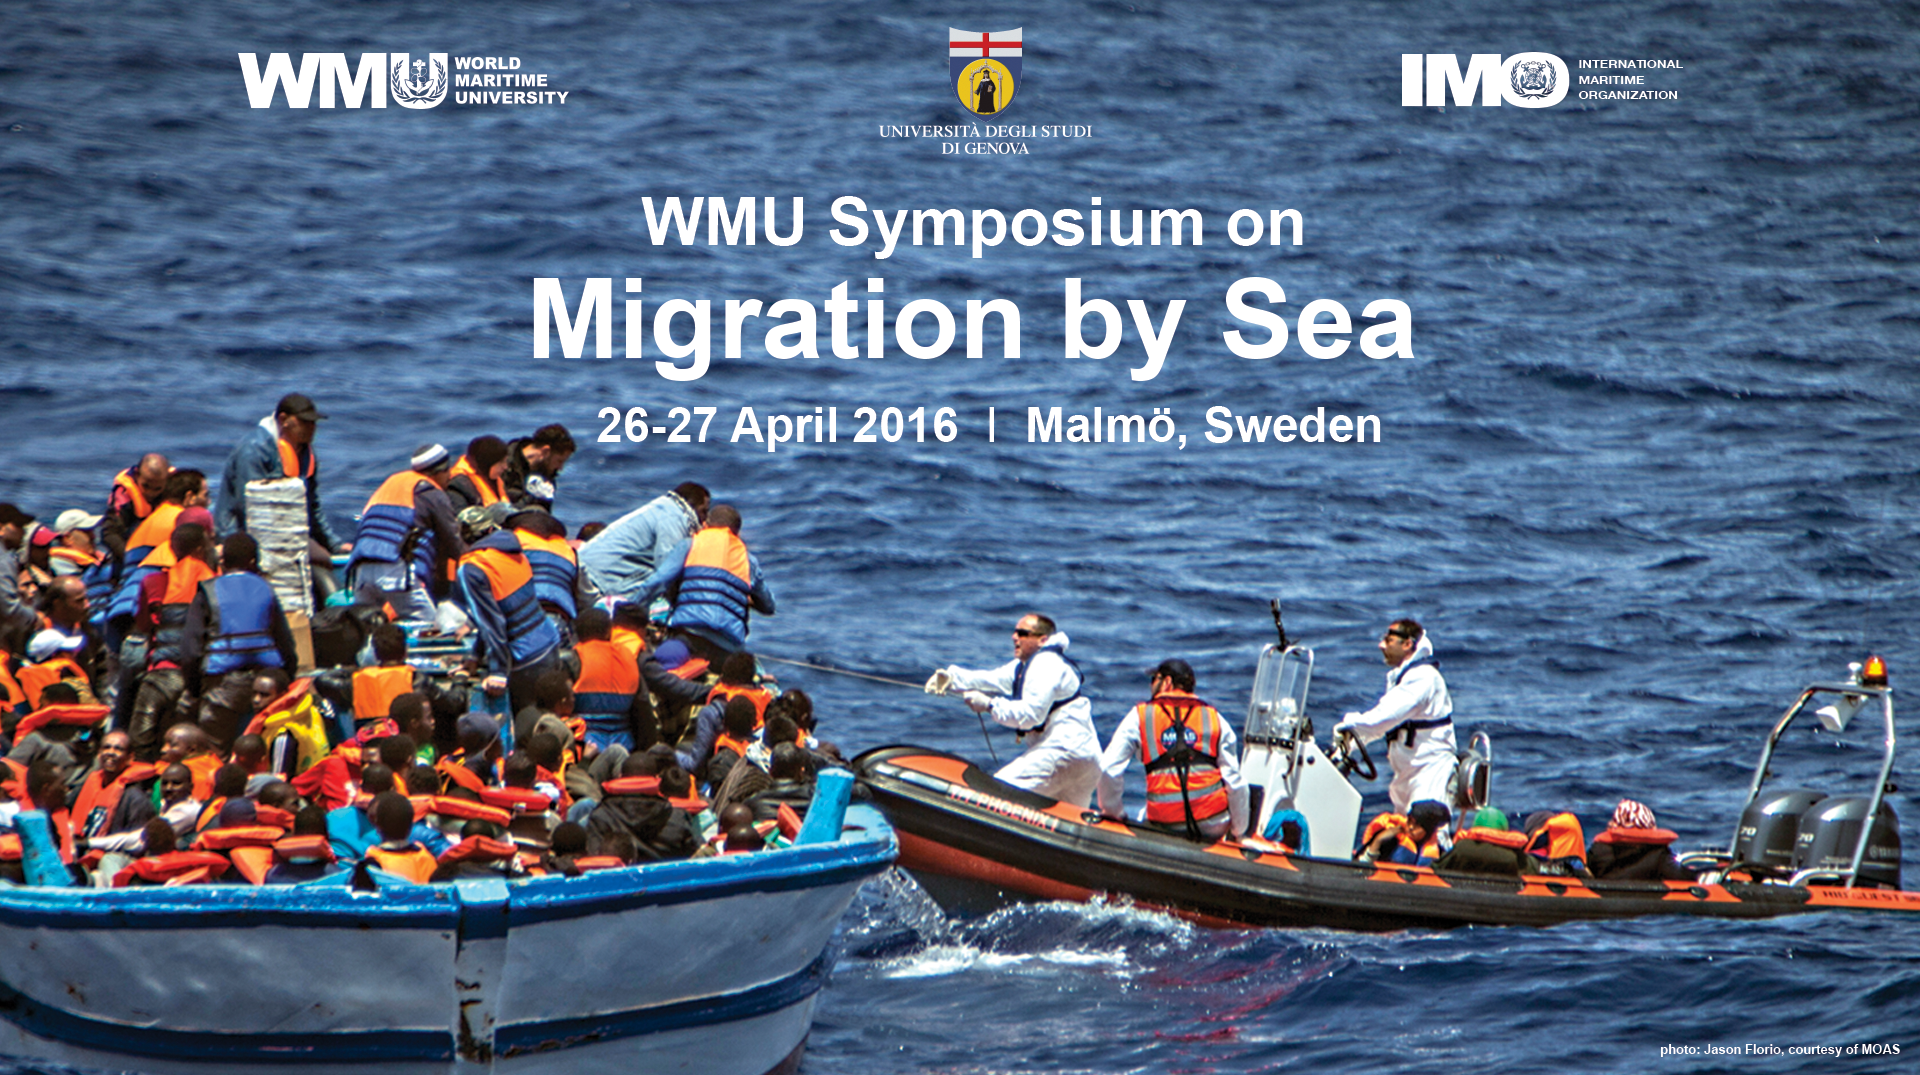 WMU Symposium on Migration by Sea, Malmö, Sweden, 26-27 April 2016